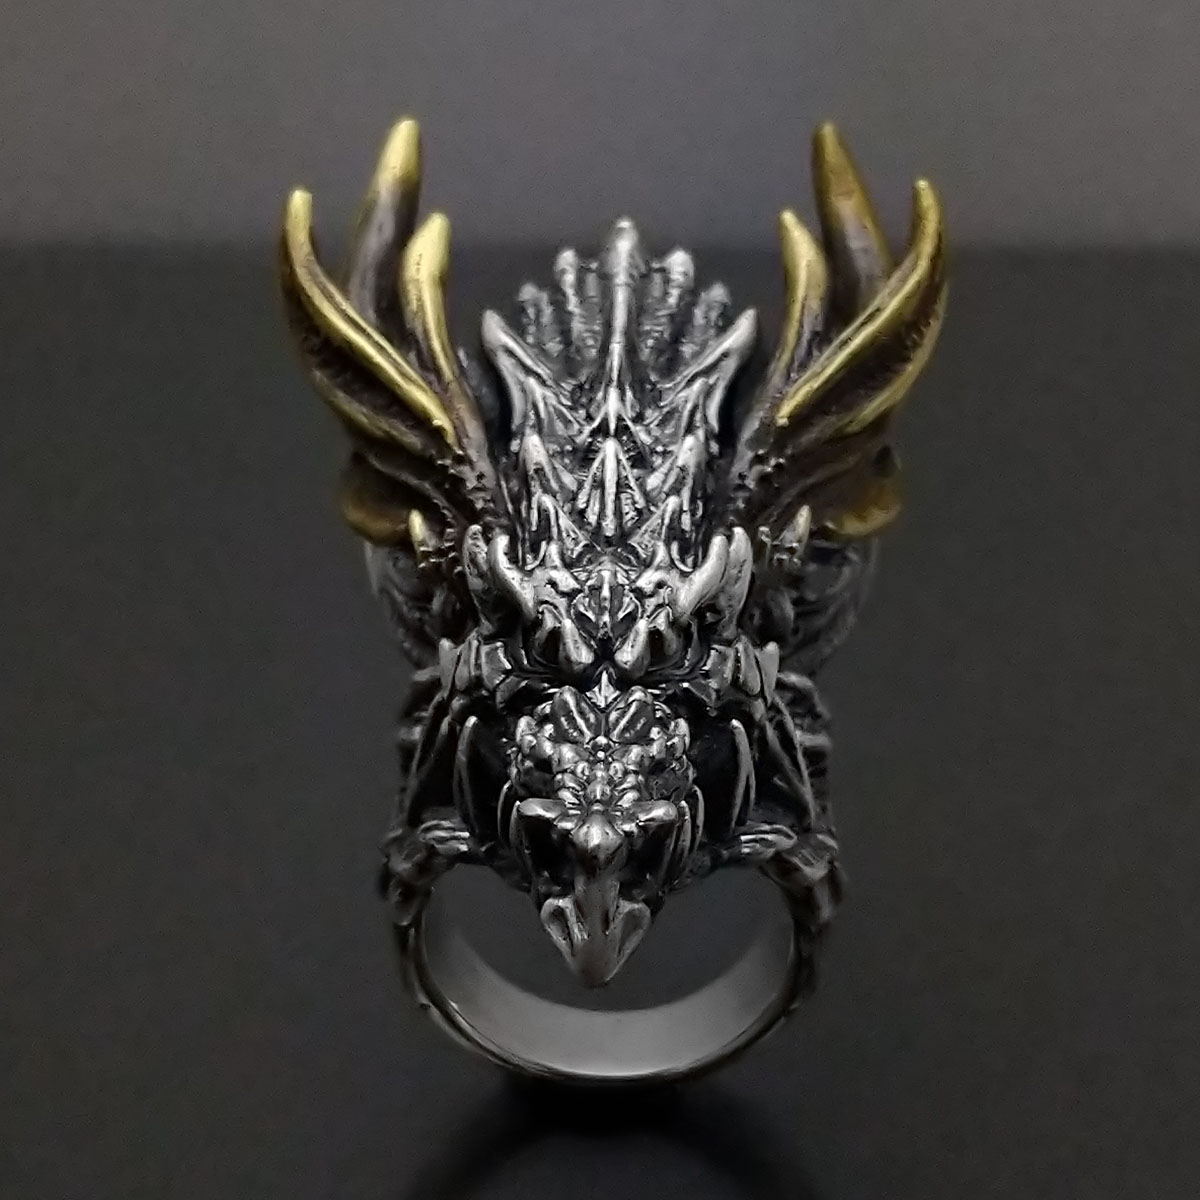 Dragon_silver_ring